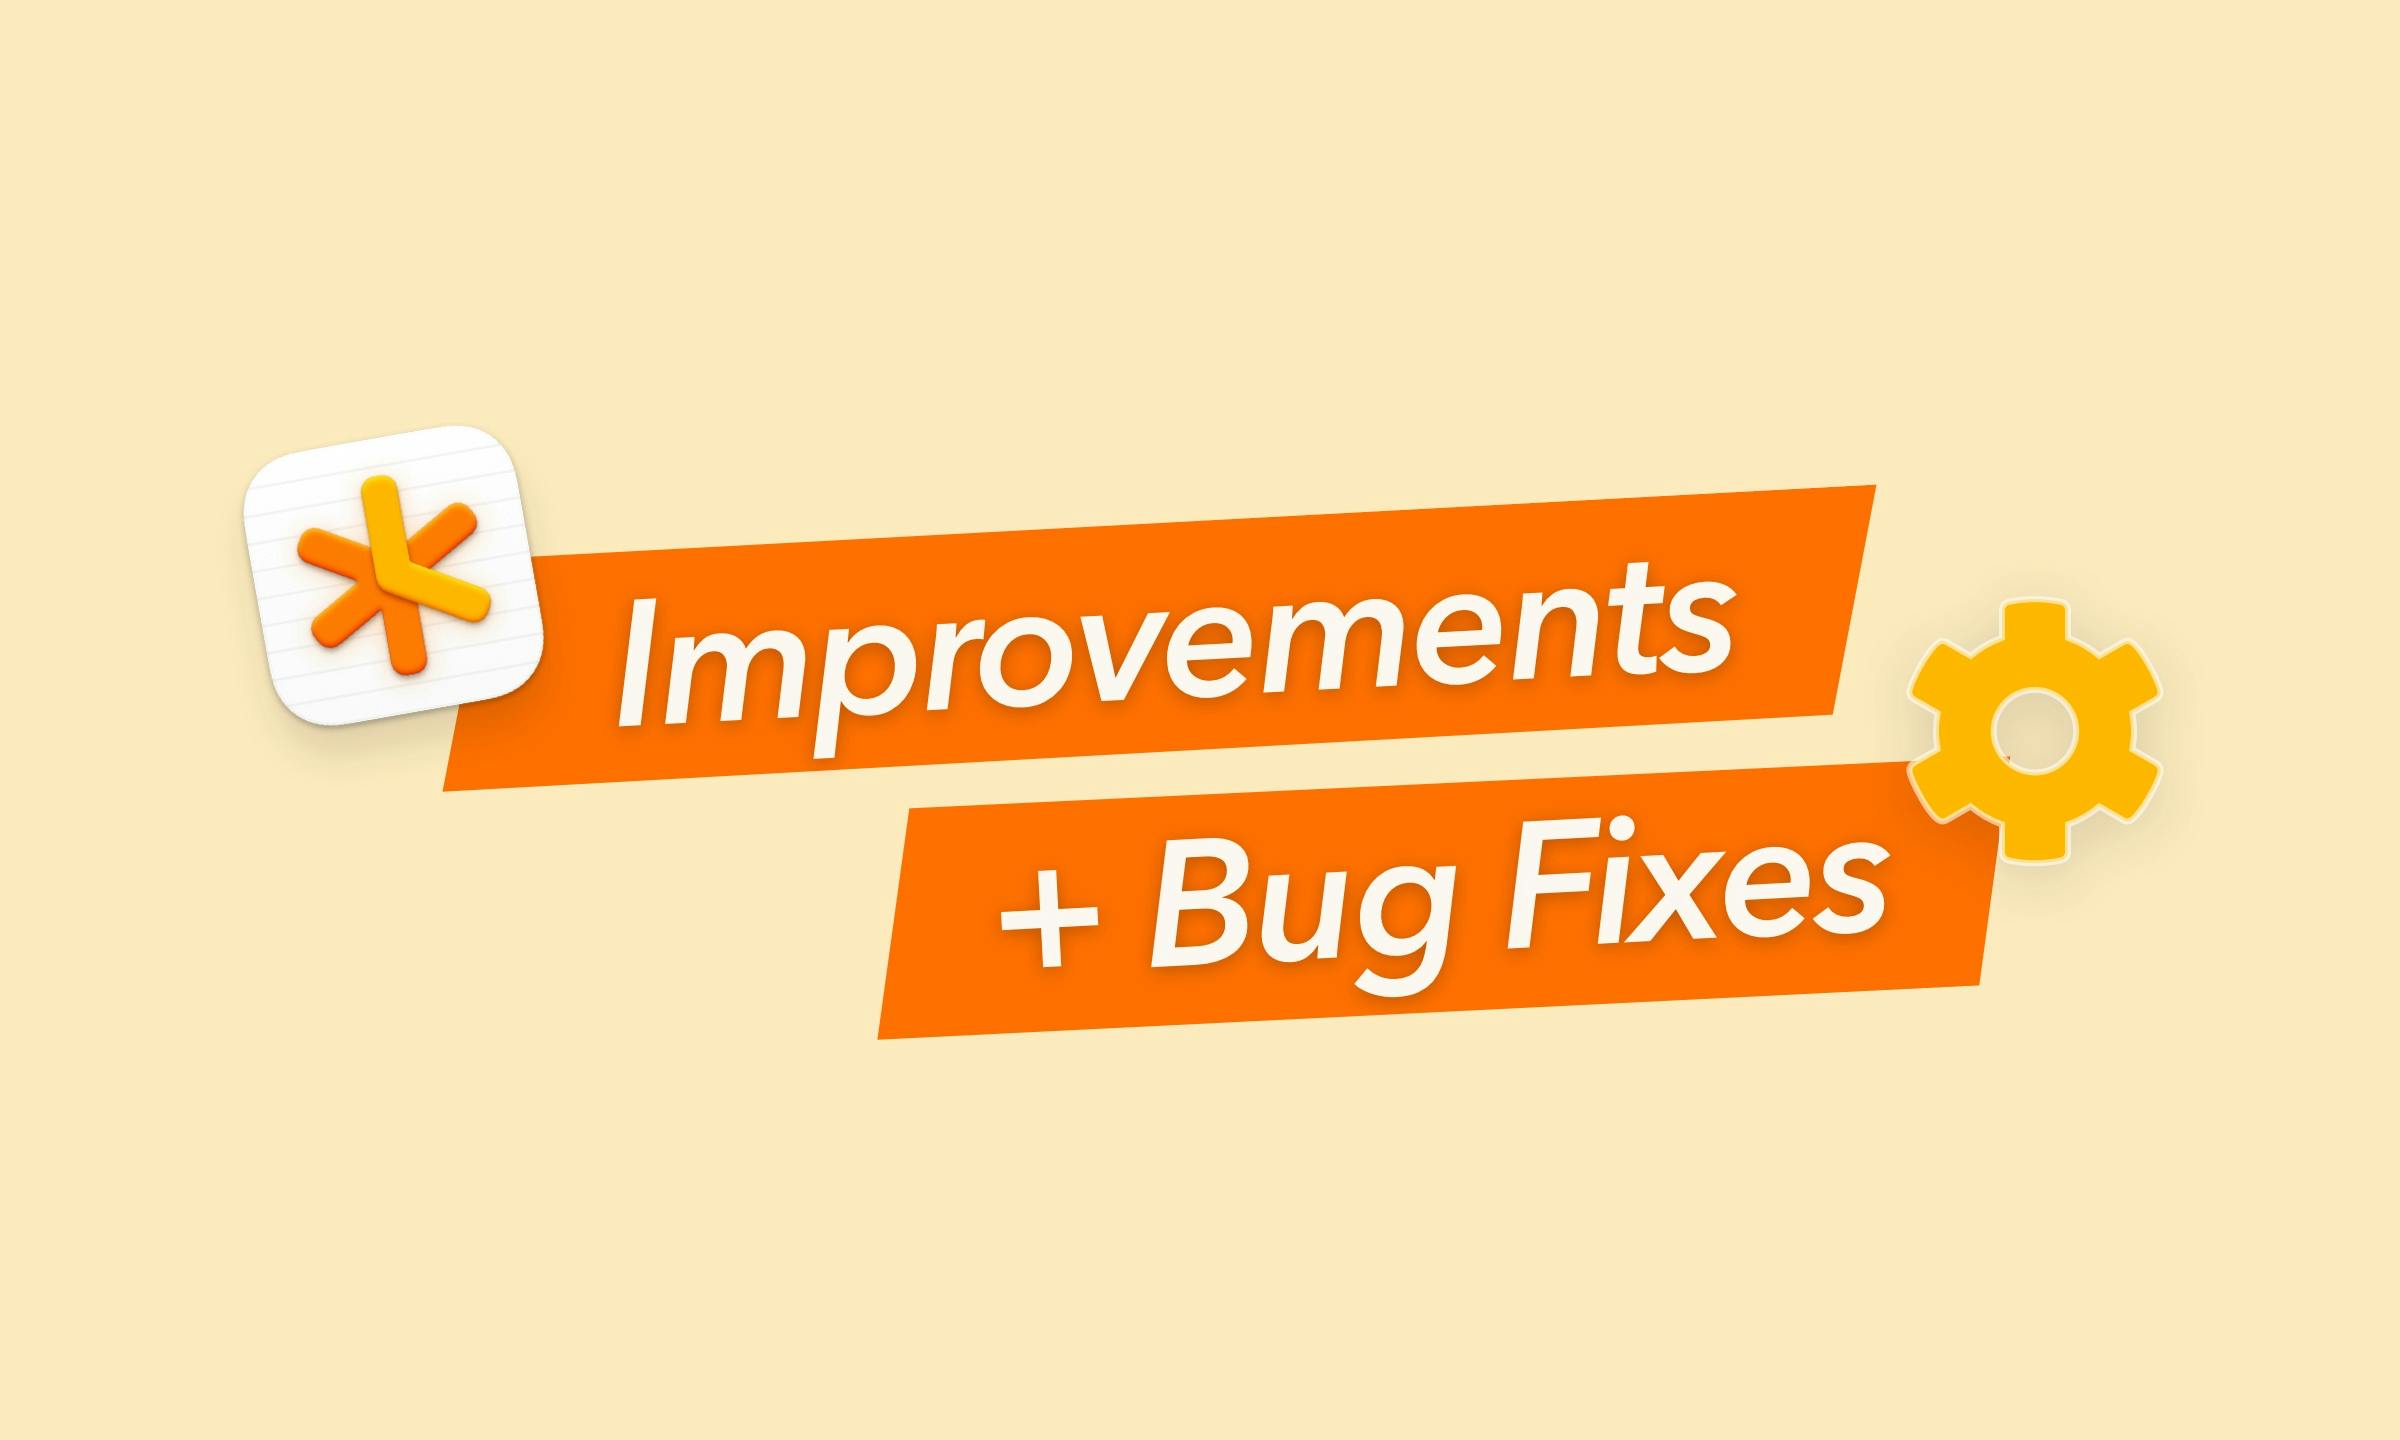 Improvements and bug fixes